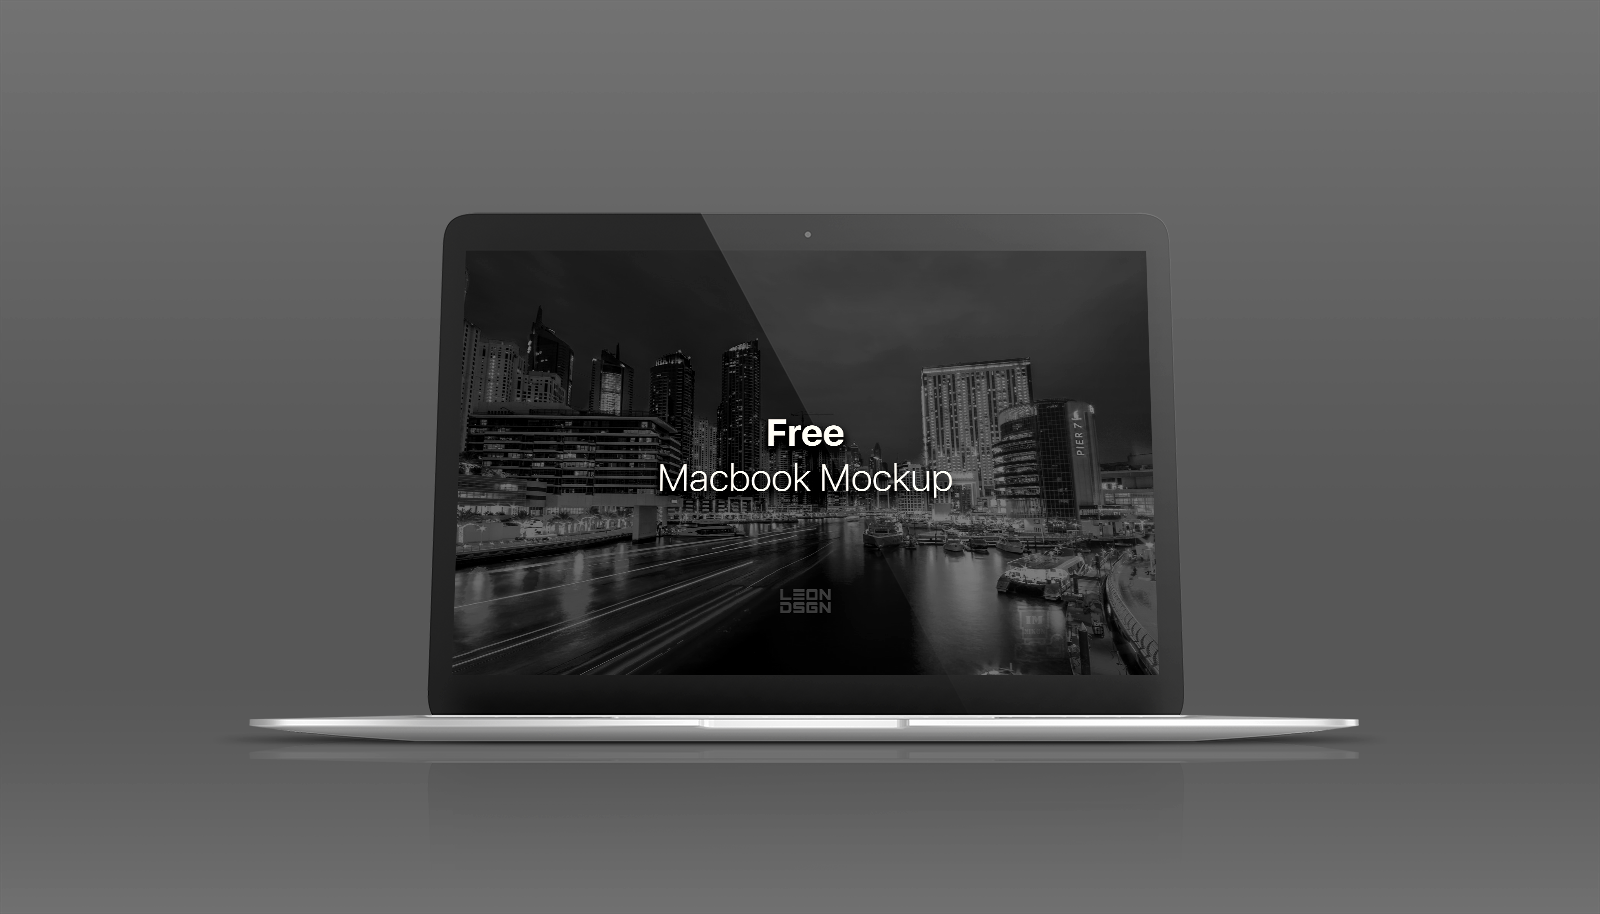 Free Macbook Mockup